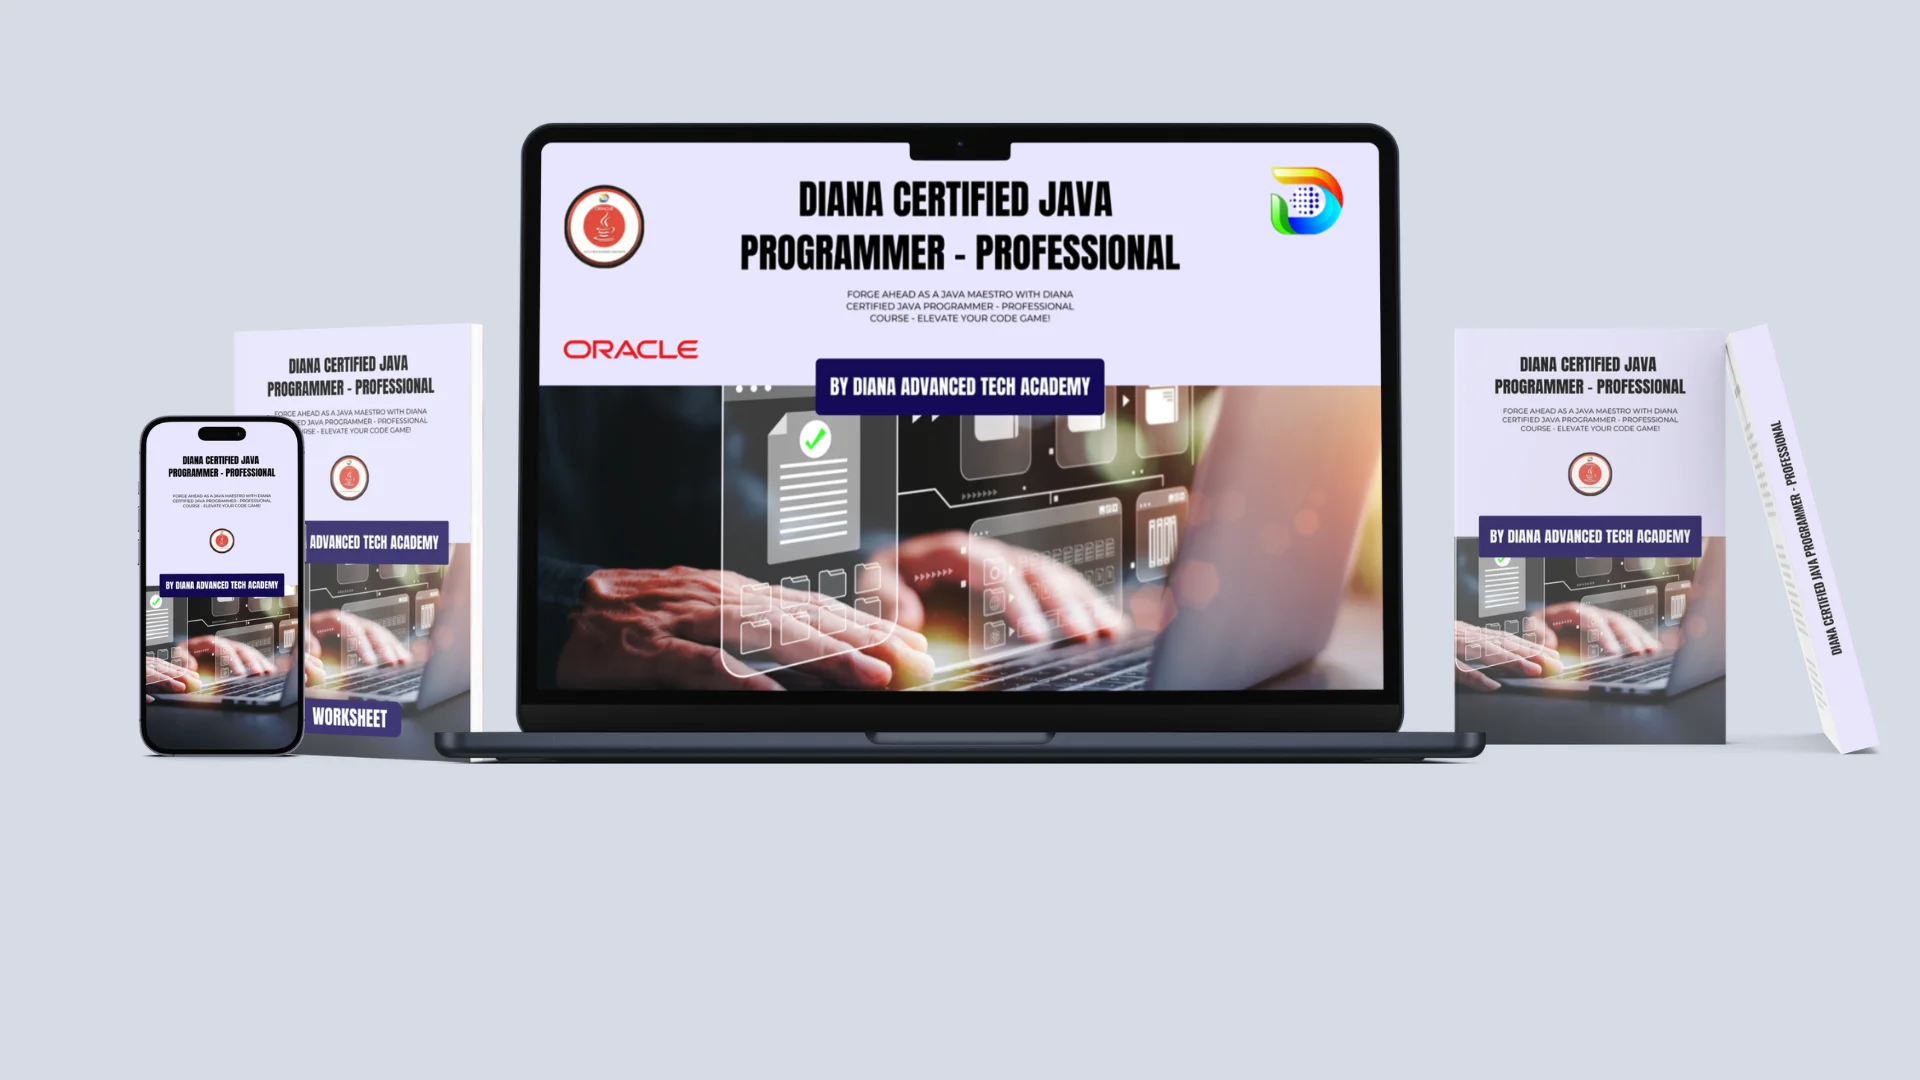 Diana Certified Java Programmer – Professional